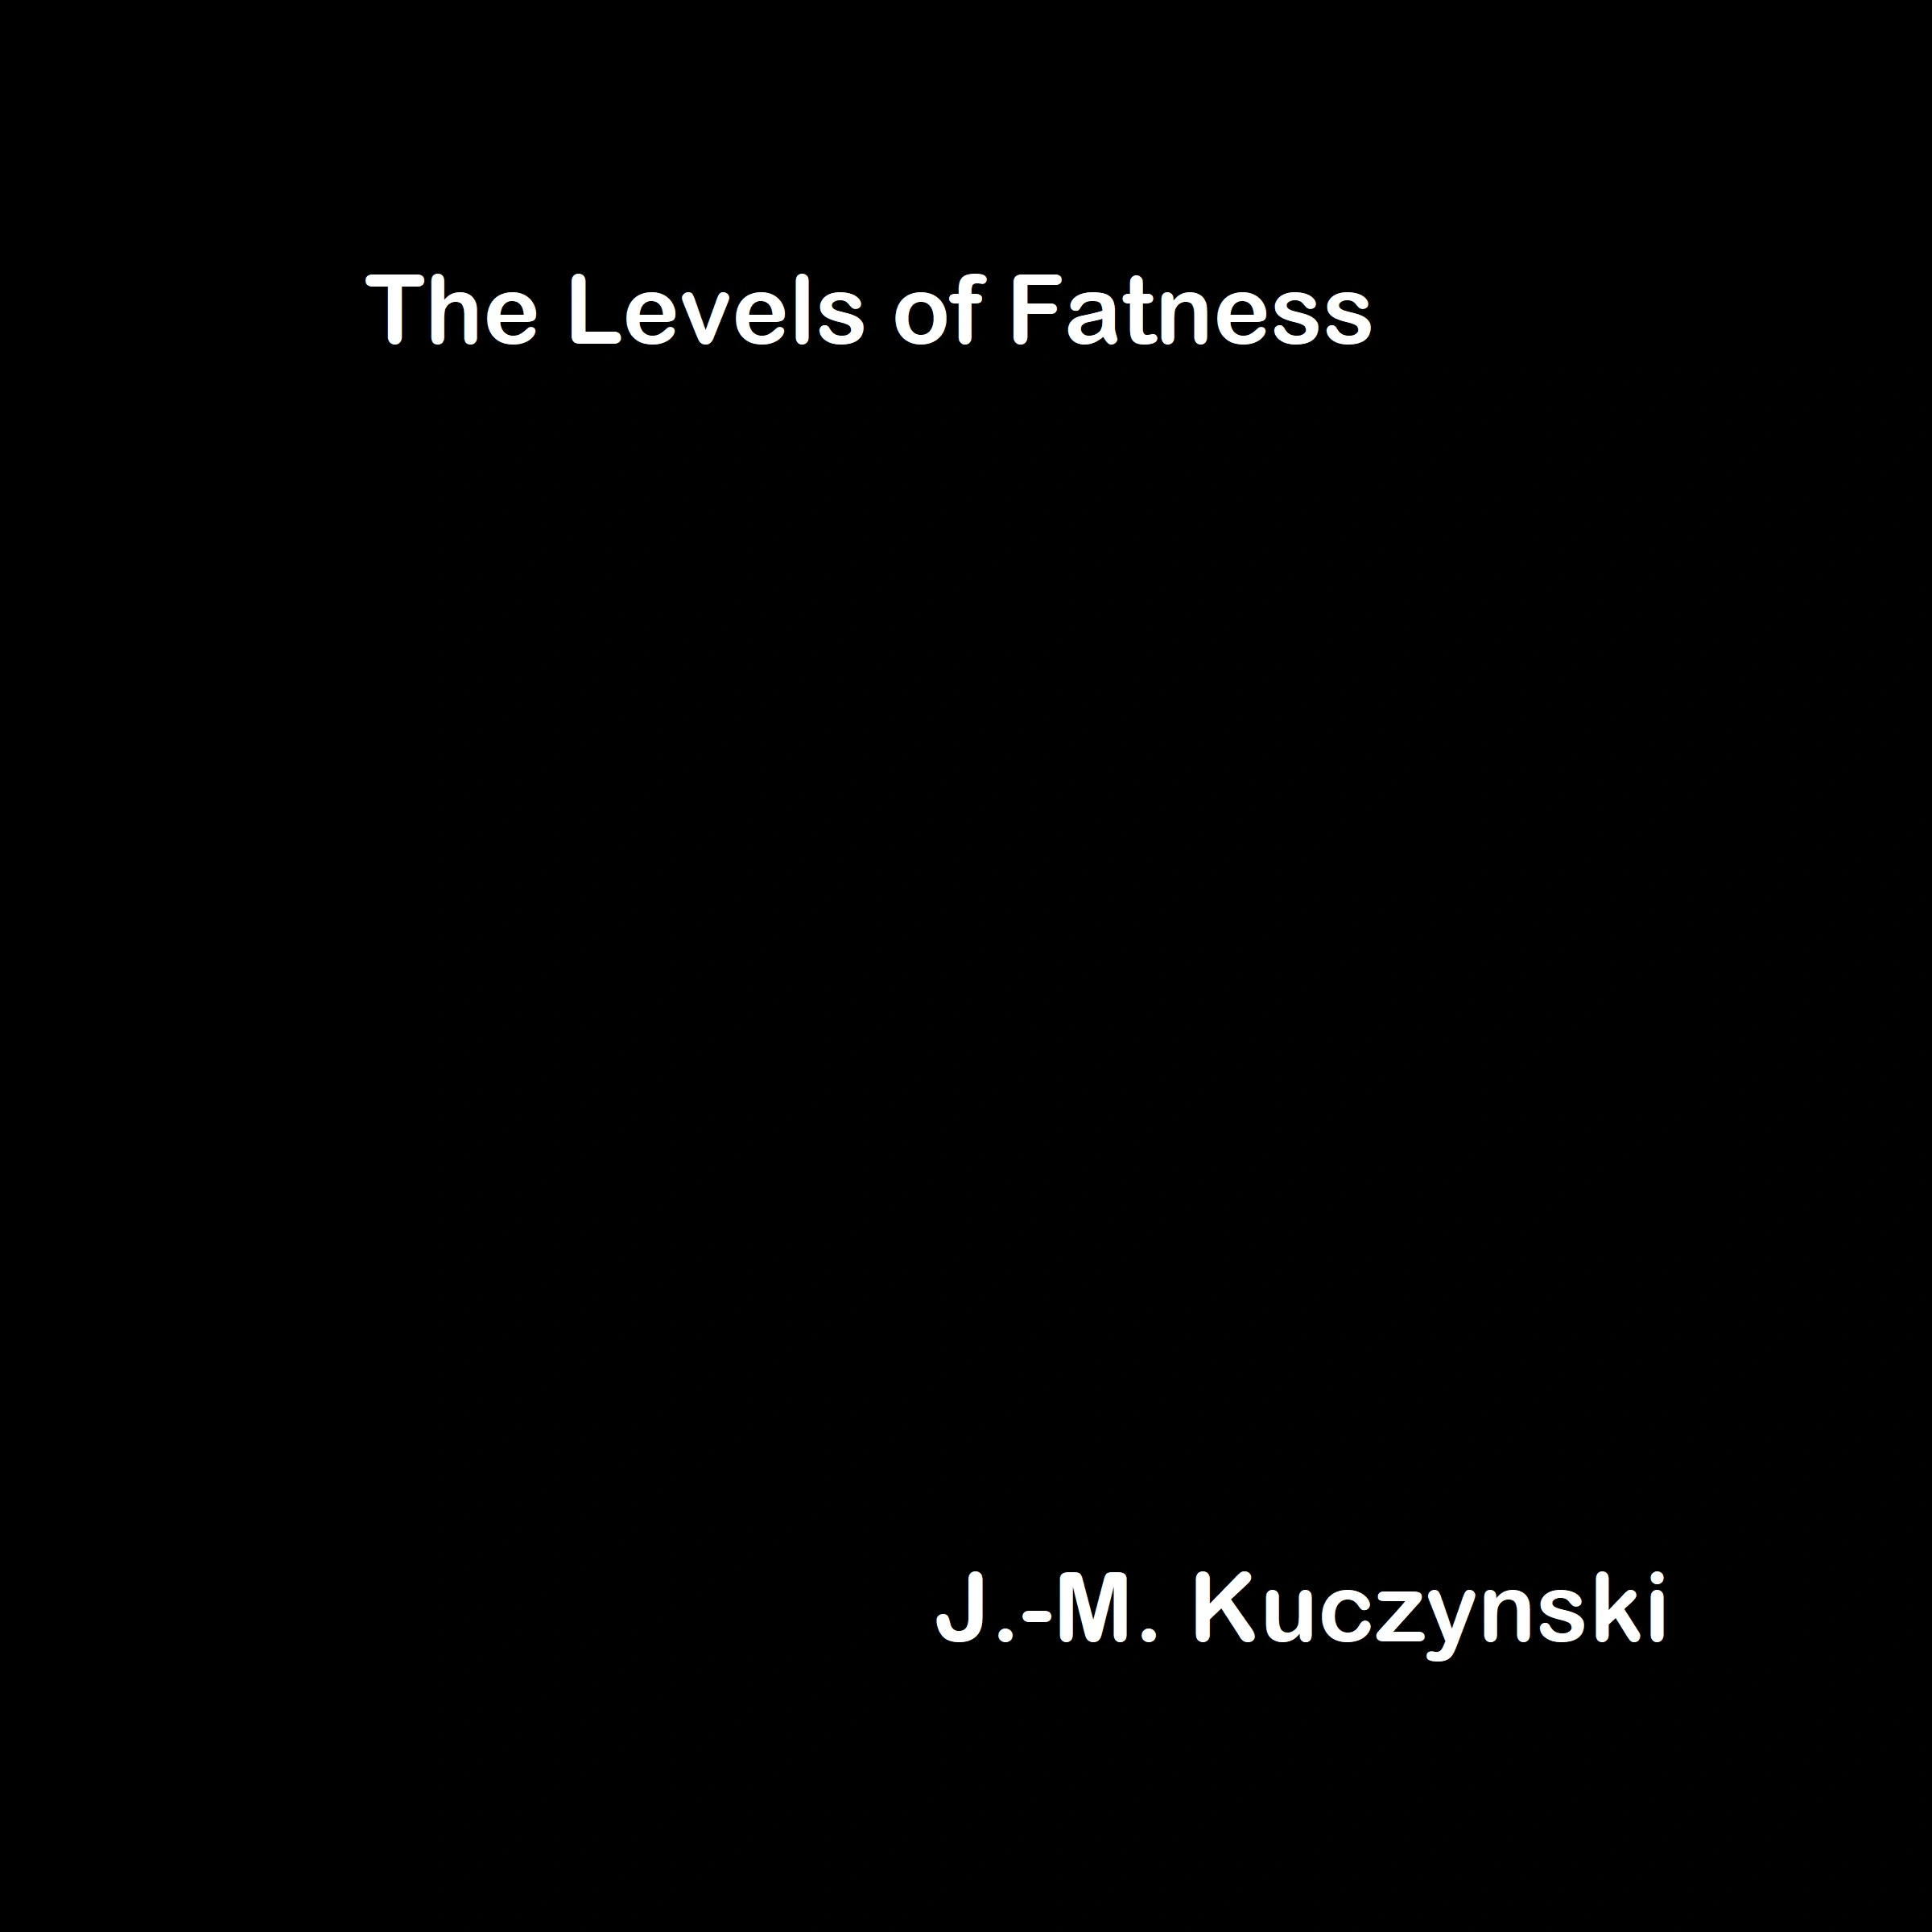 The Levels of Fatness Audiobook by J.-M. Kuczynski